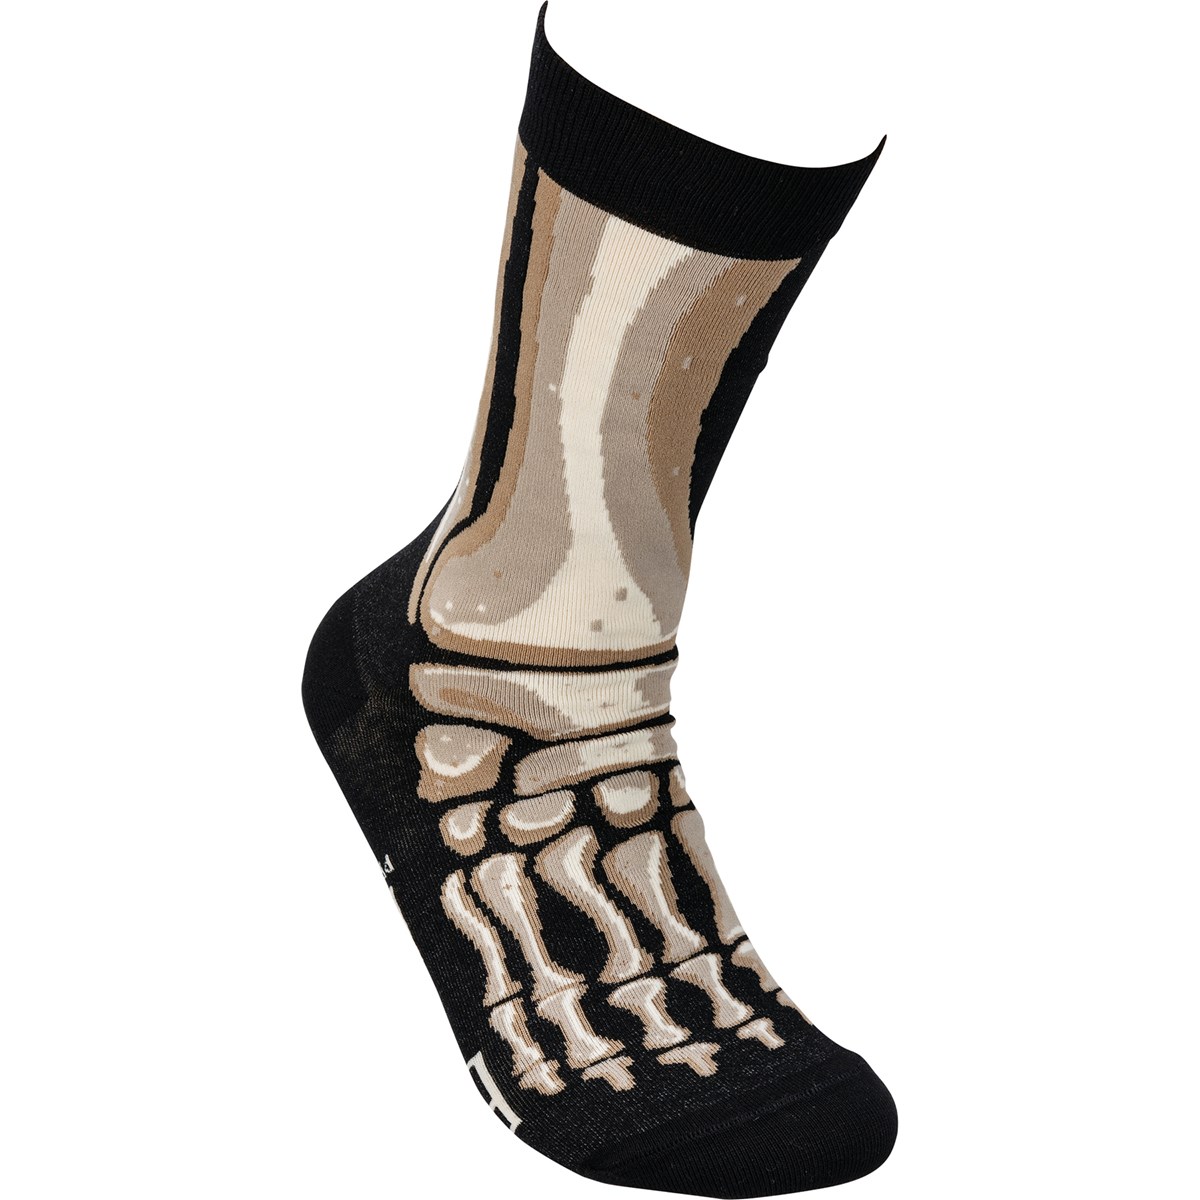 Socks - Bad To The Bone - One Size Fits Most - Cotton, Nylon, Spandex